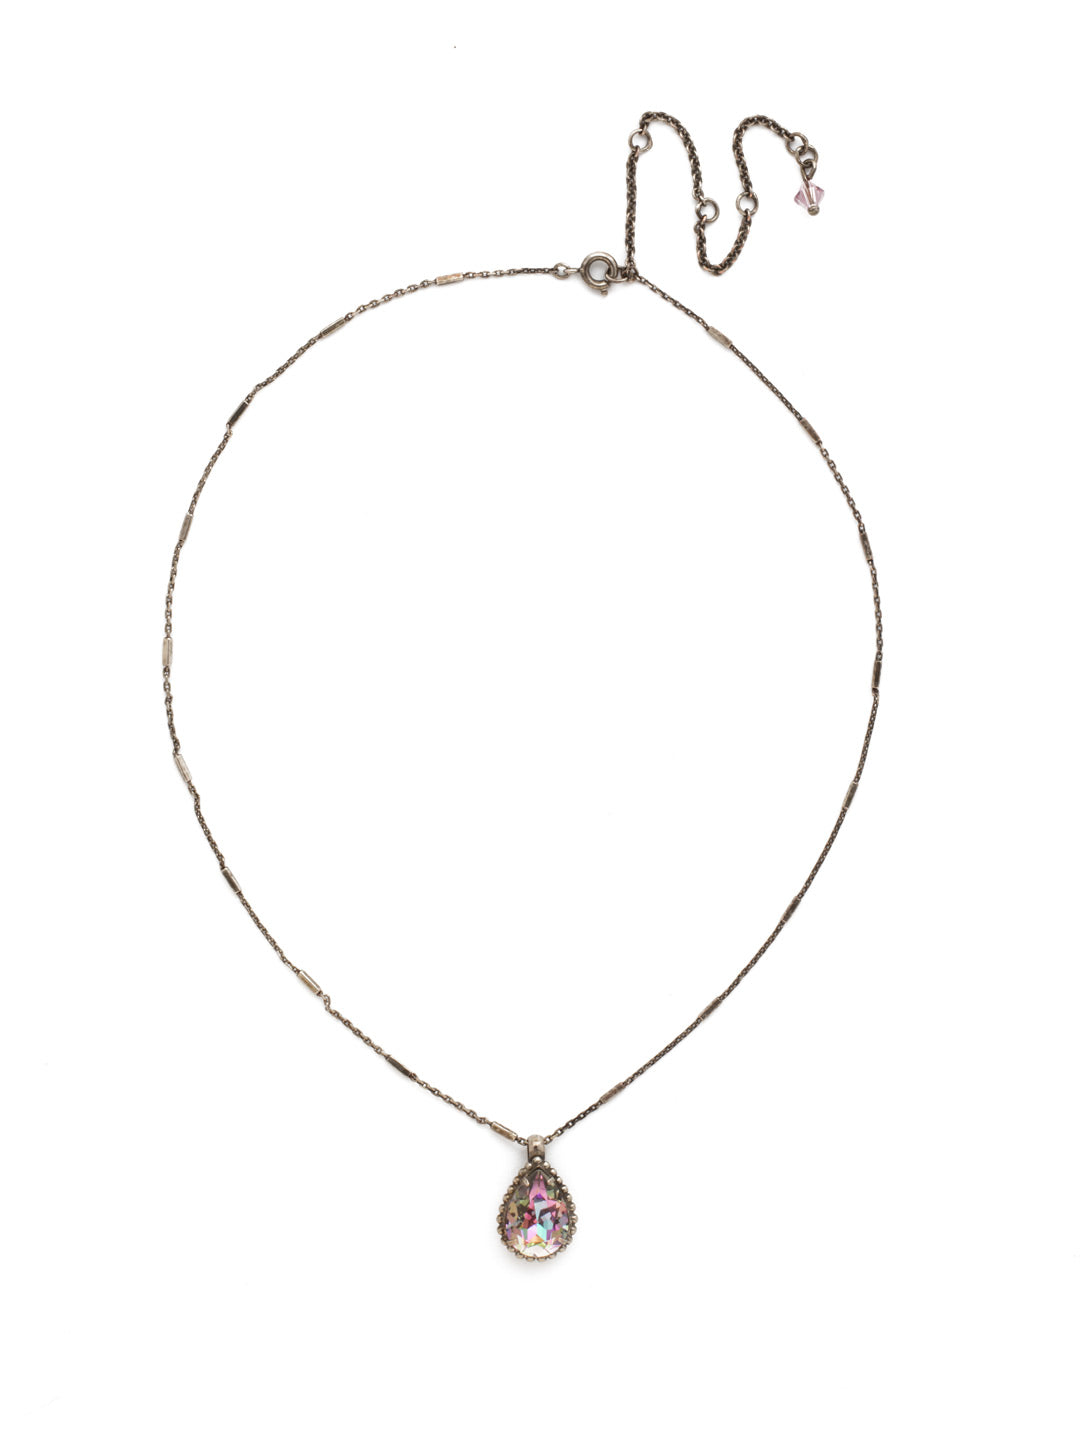 Simply Adorned Pendant Necklace - NDN12ASPUL